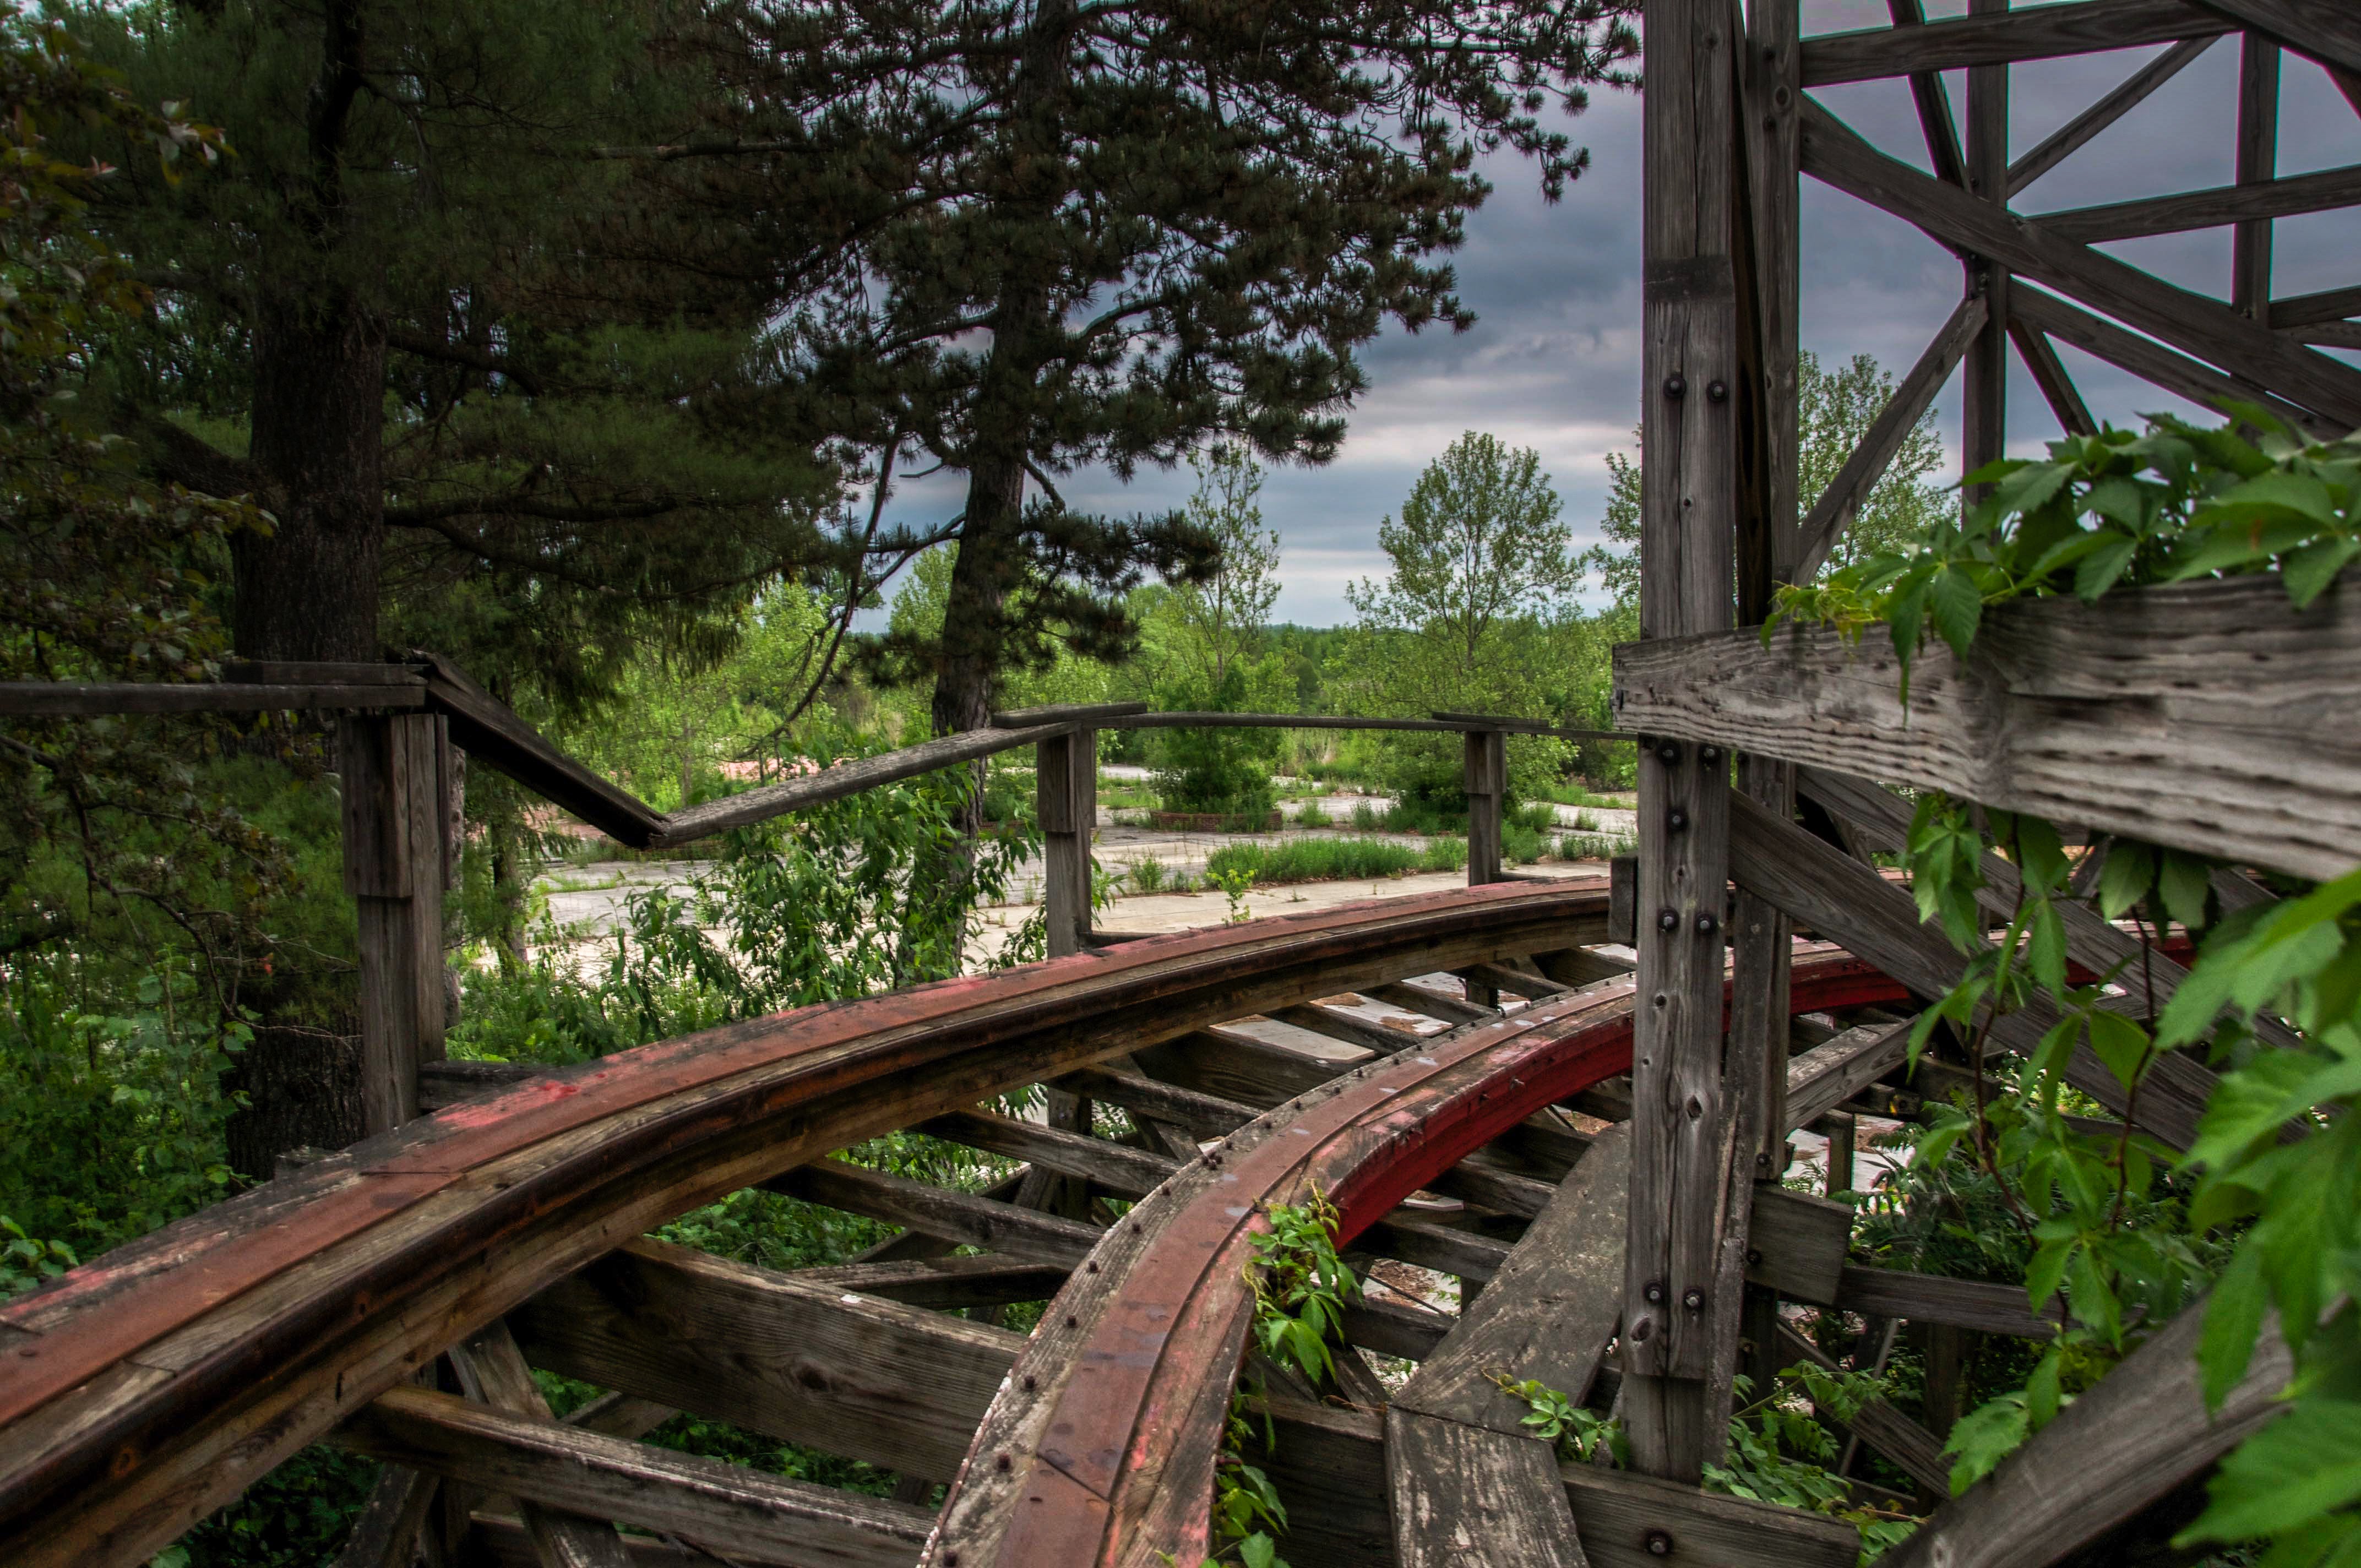 abandoned amusement parks you can visit